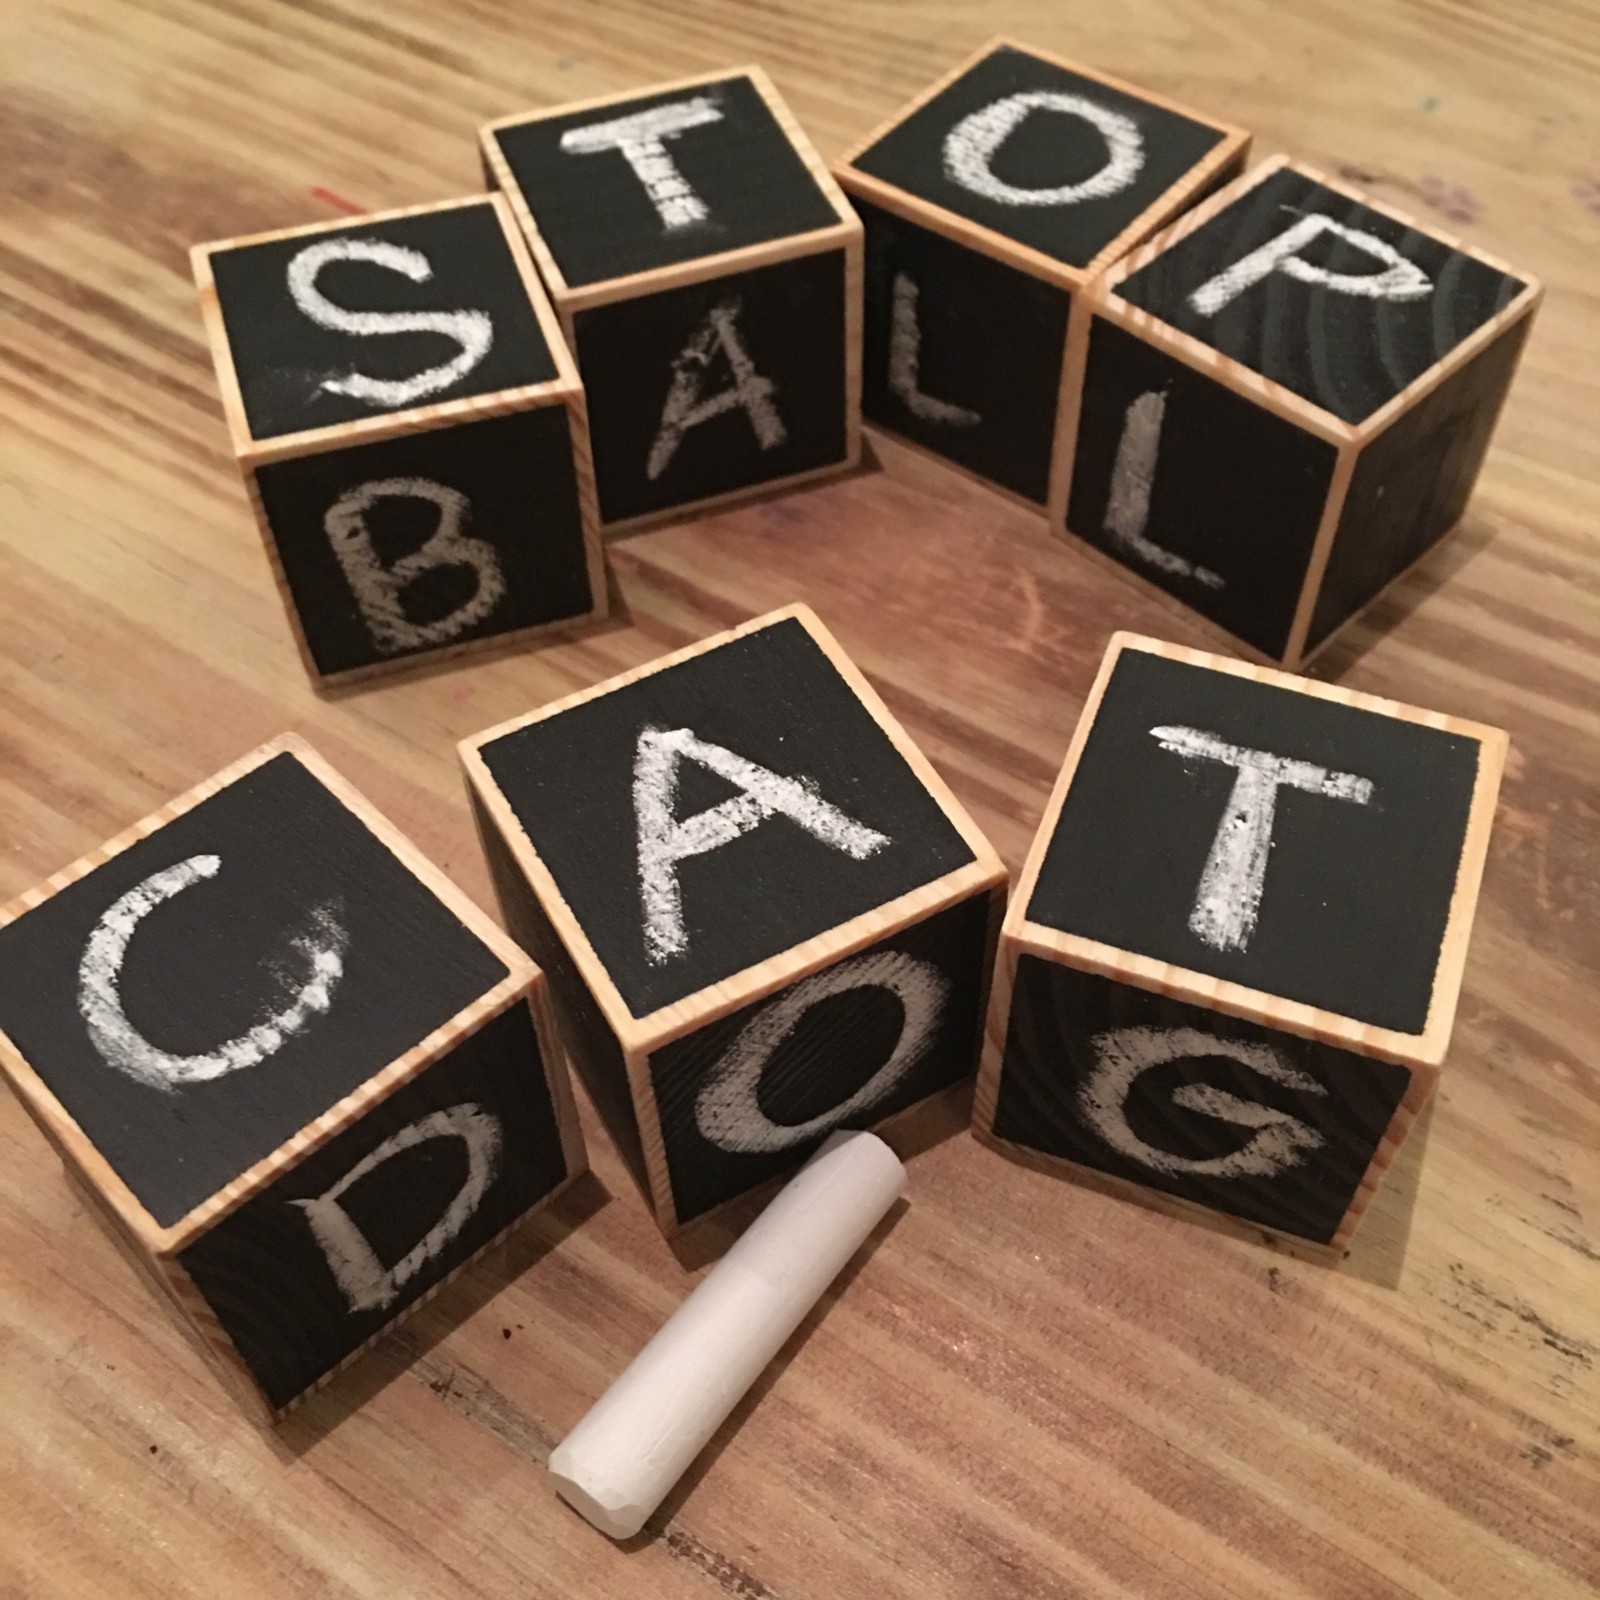 Children's wooden blocks spelling stop, ball, cat, and dog